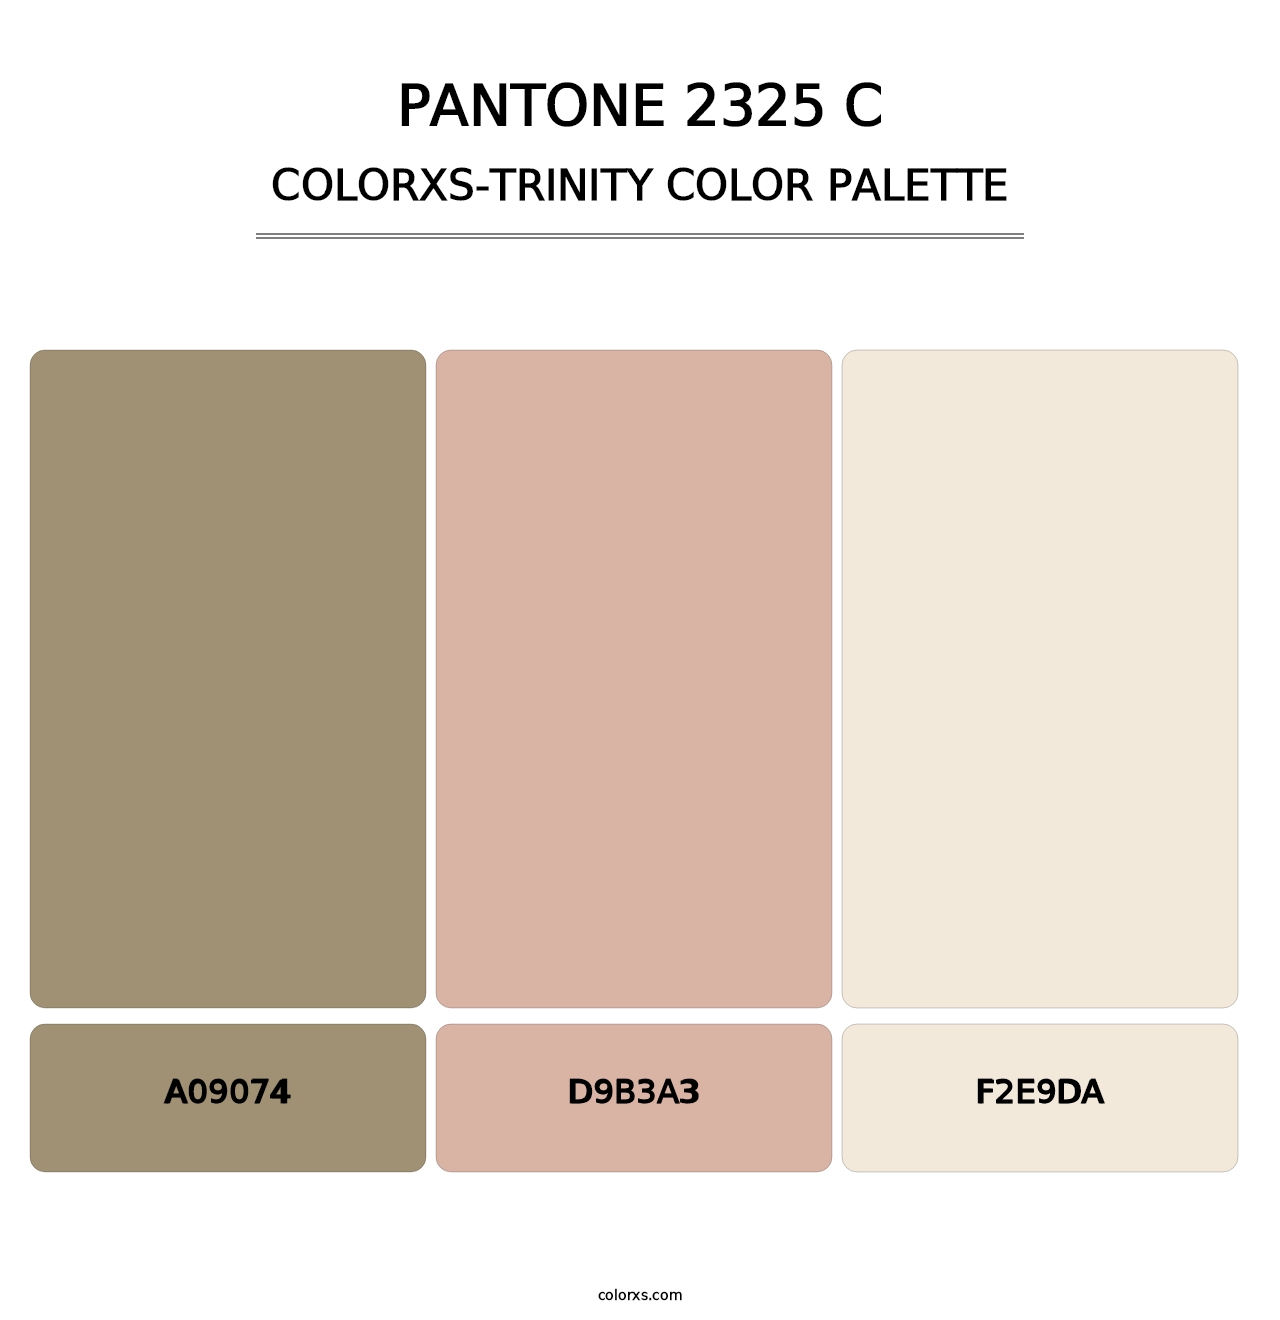 PANTONE 2325 C - Colorxs Trinity Palette